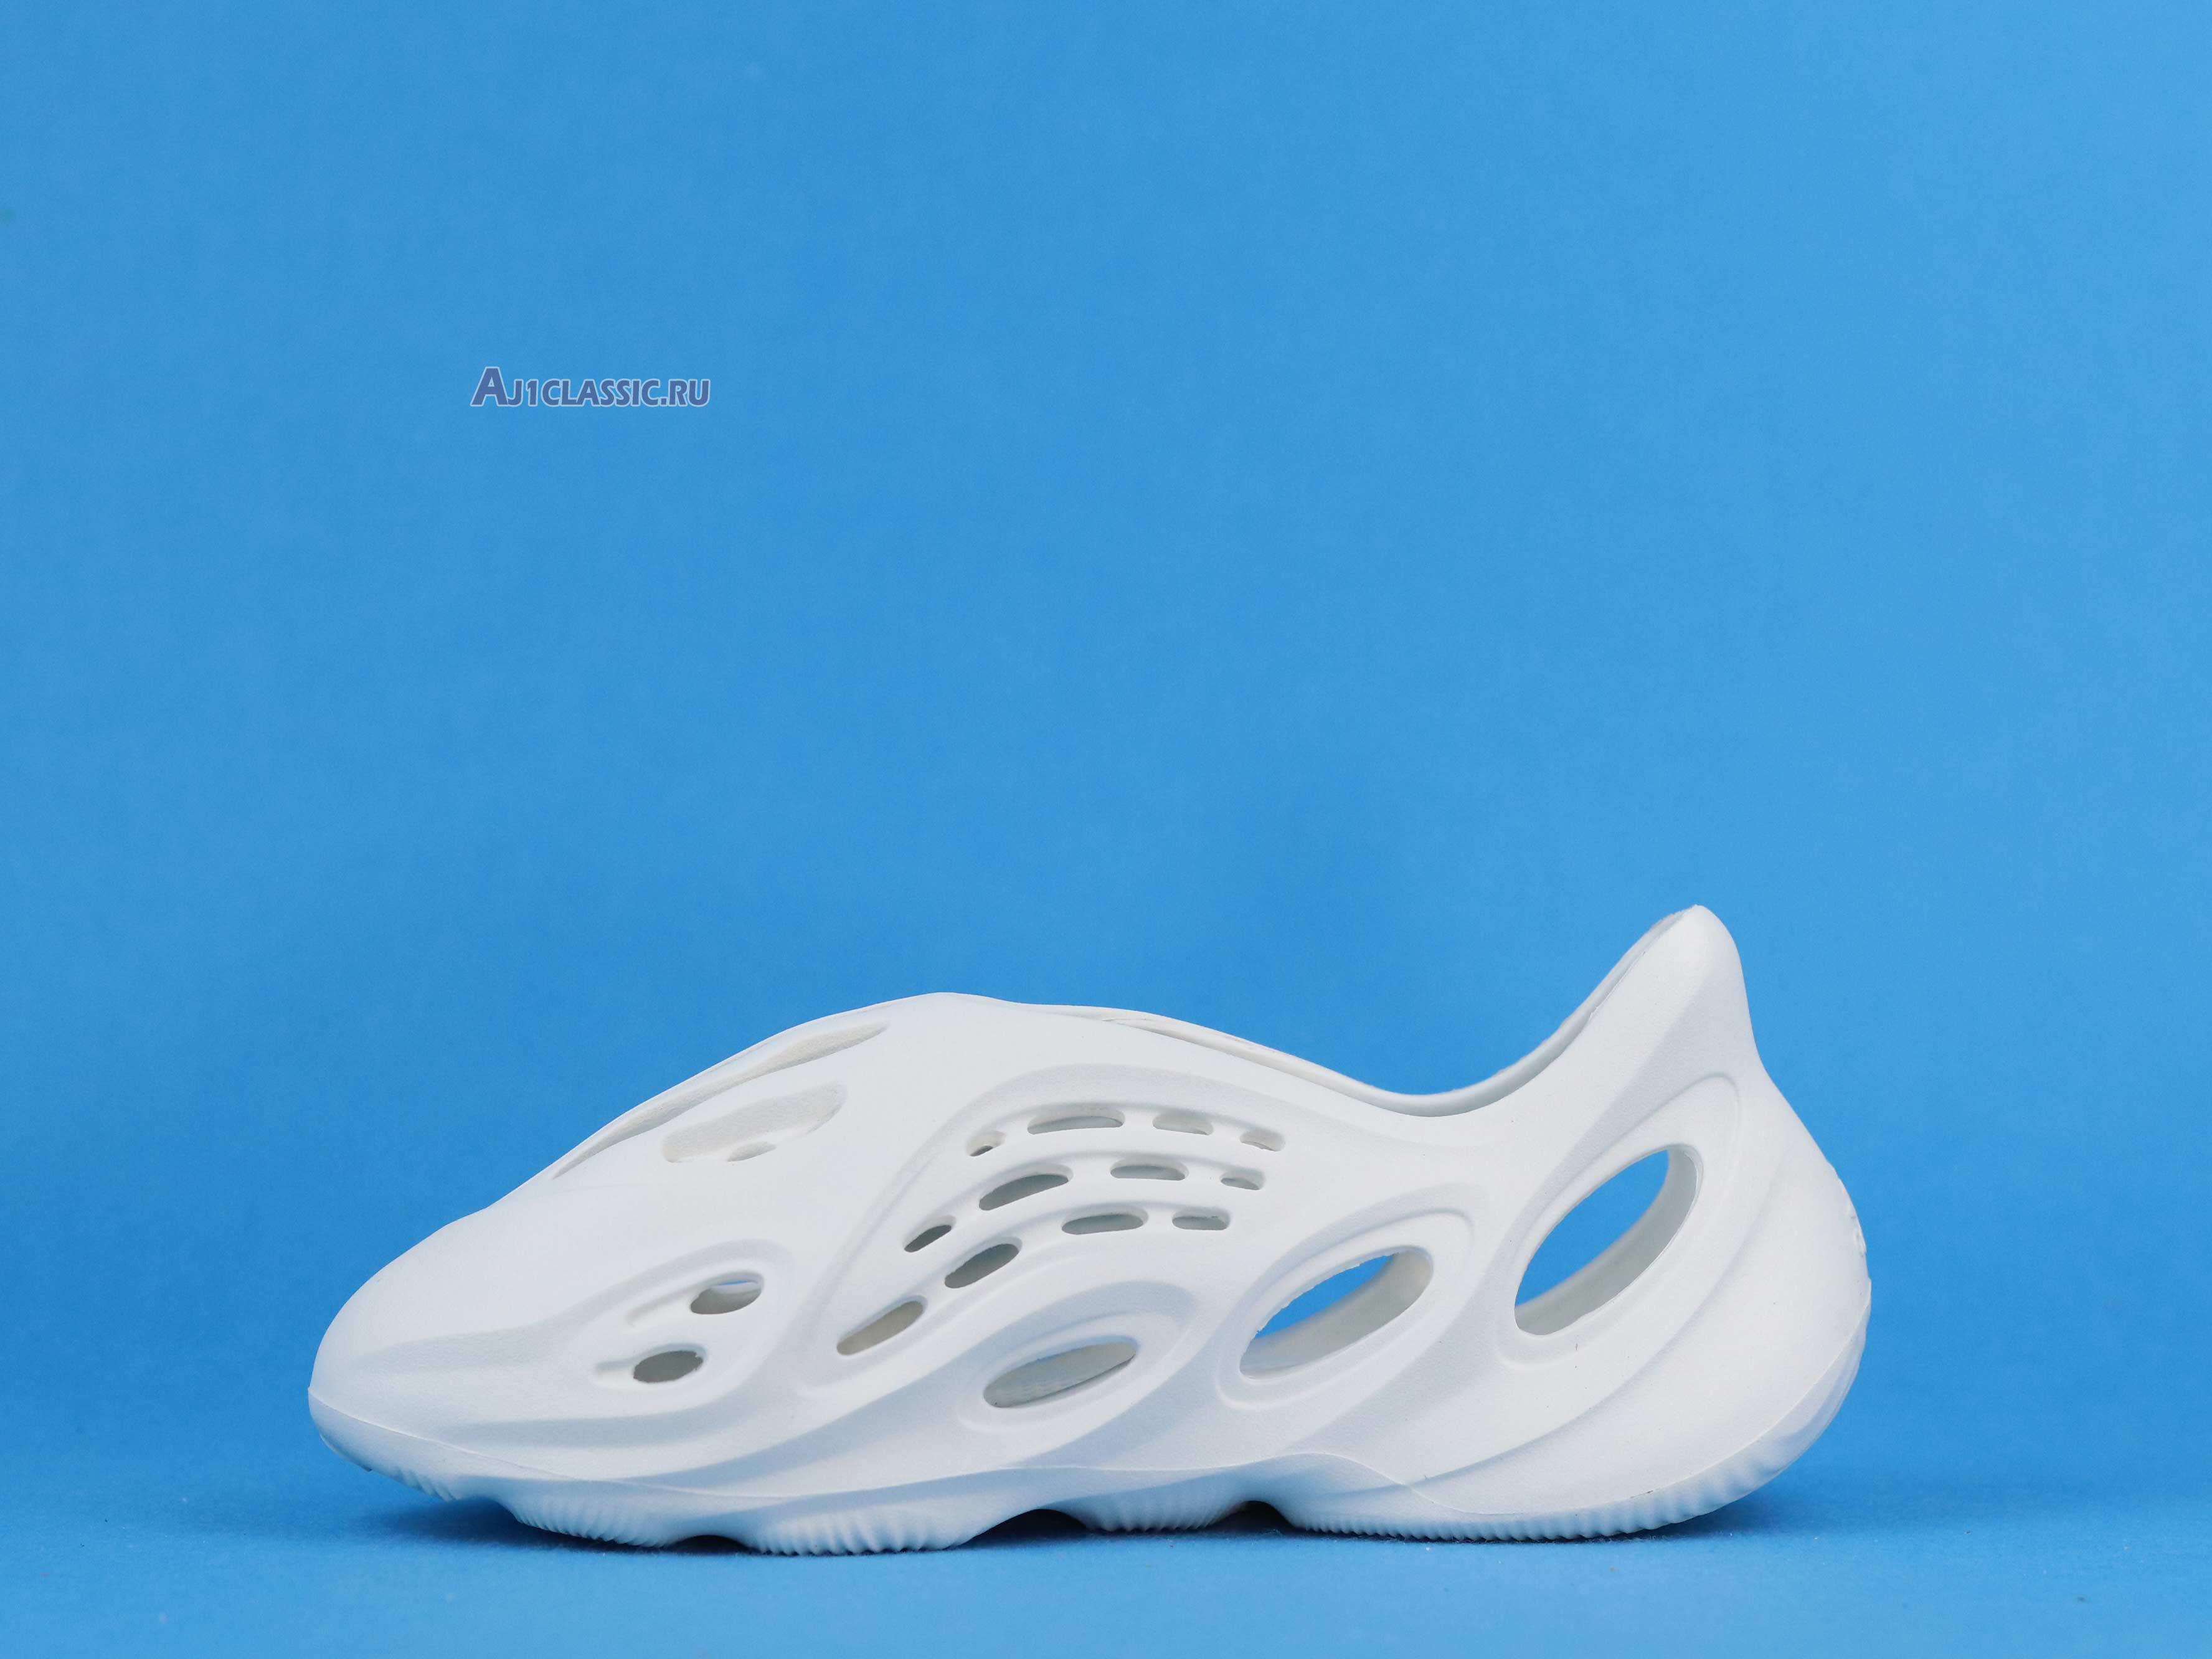 Adidas Yeezy Foam Runner "Ararat" G55486